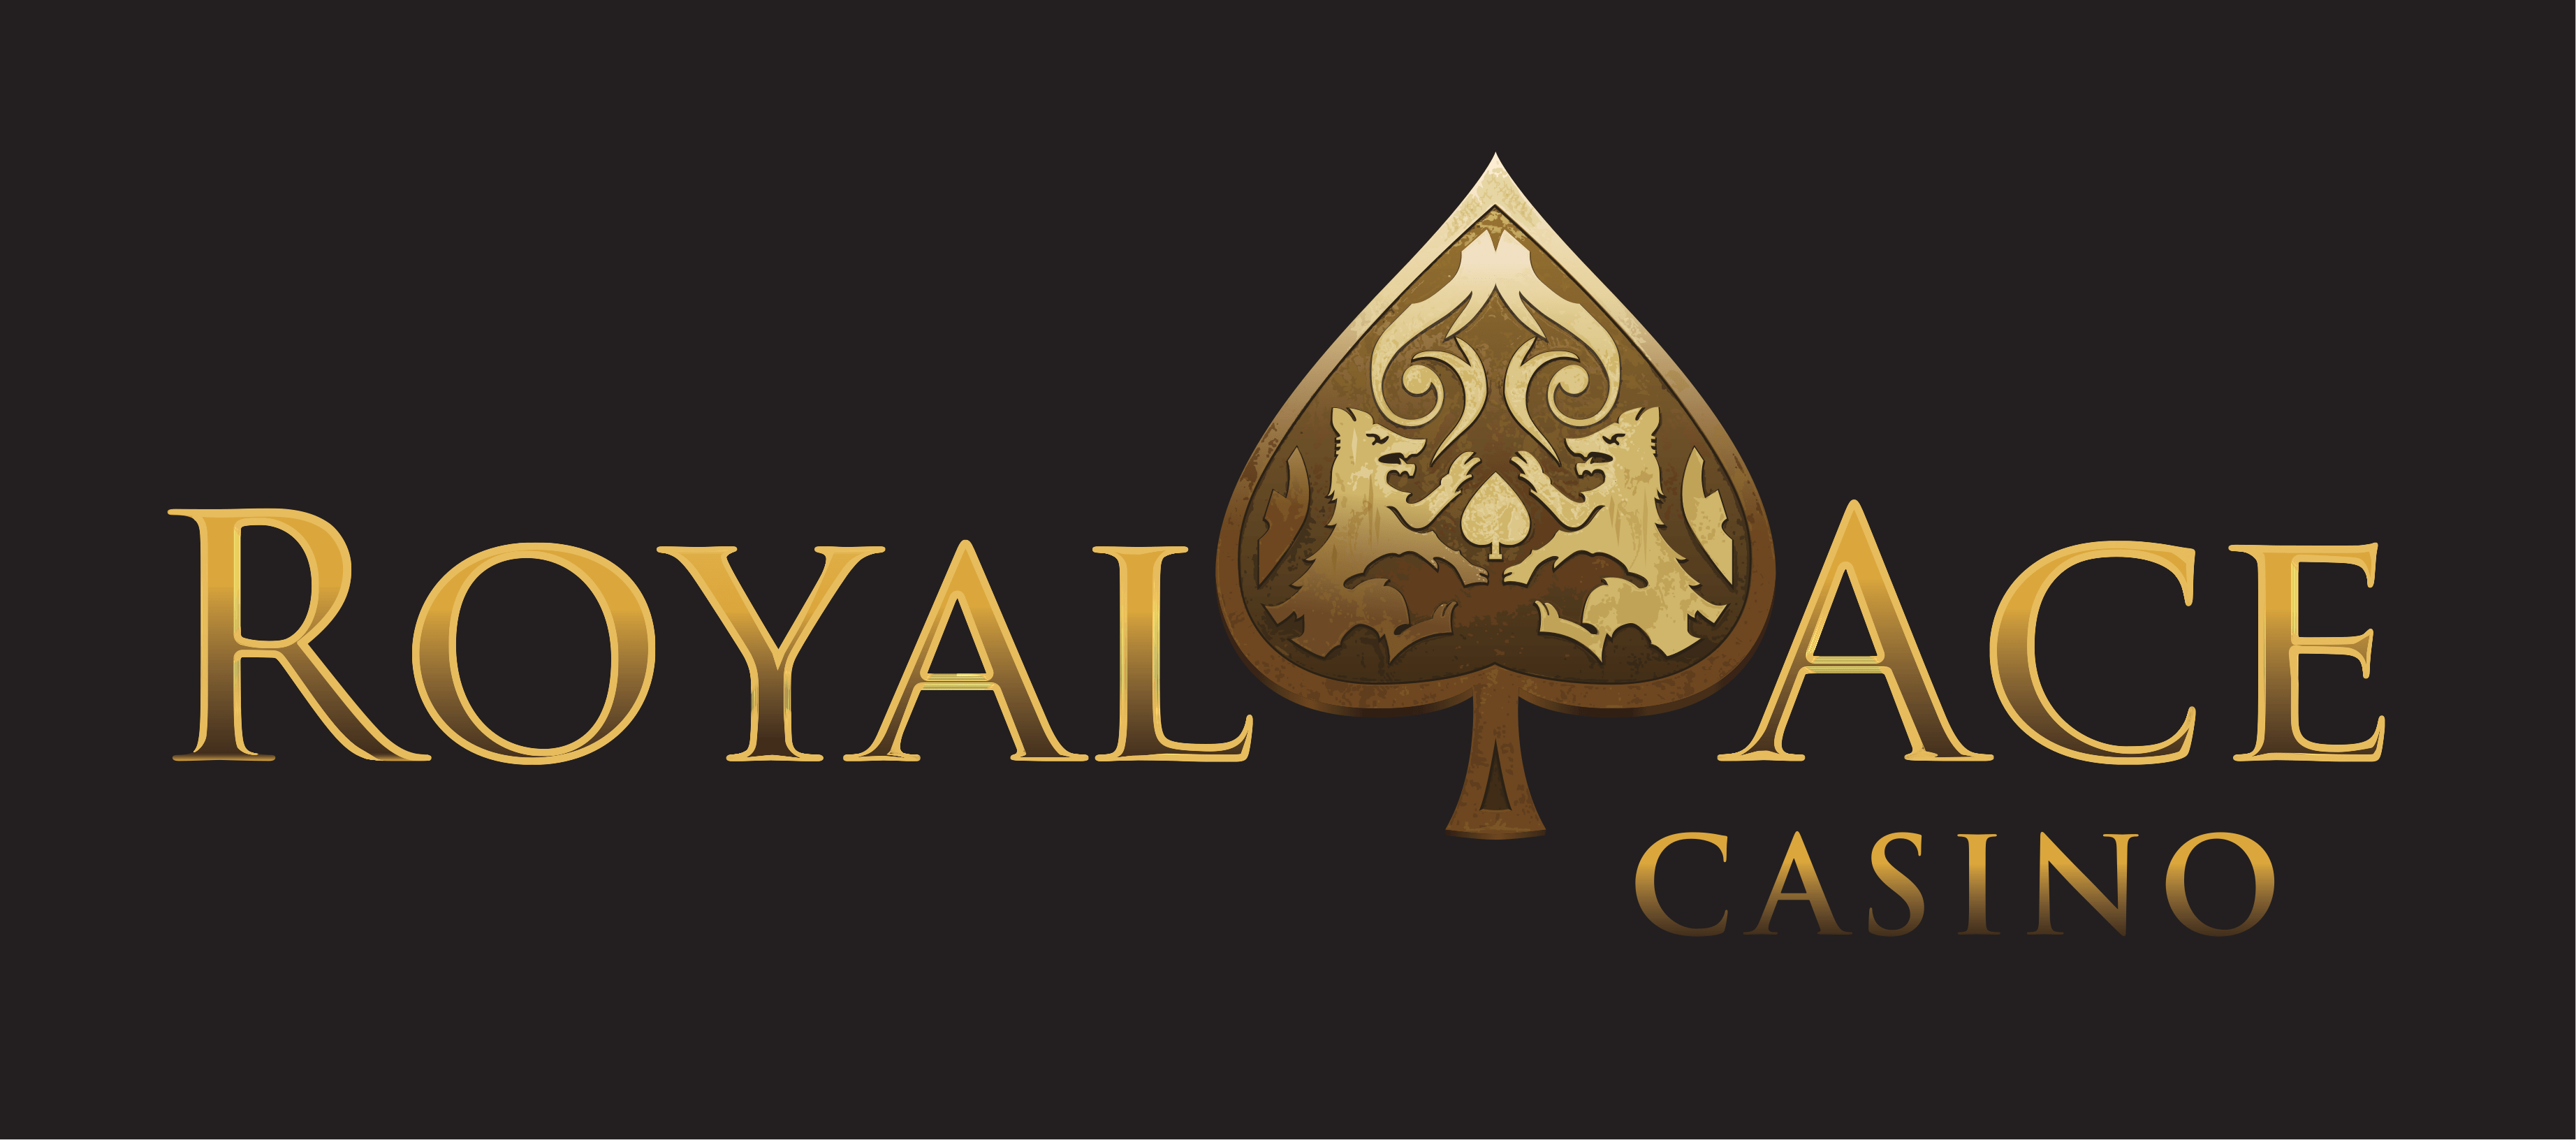 Royal ace casino $200 no deposit bonus codes